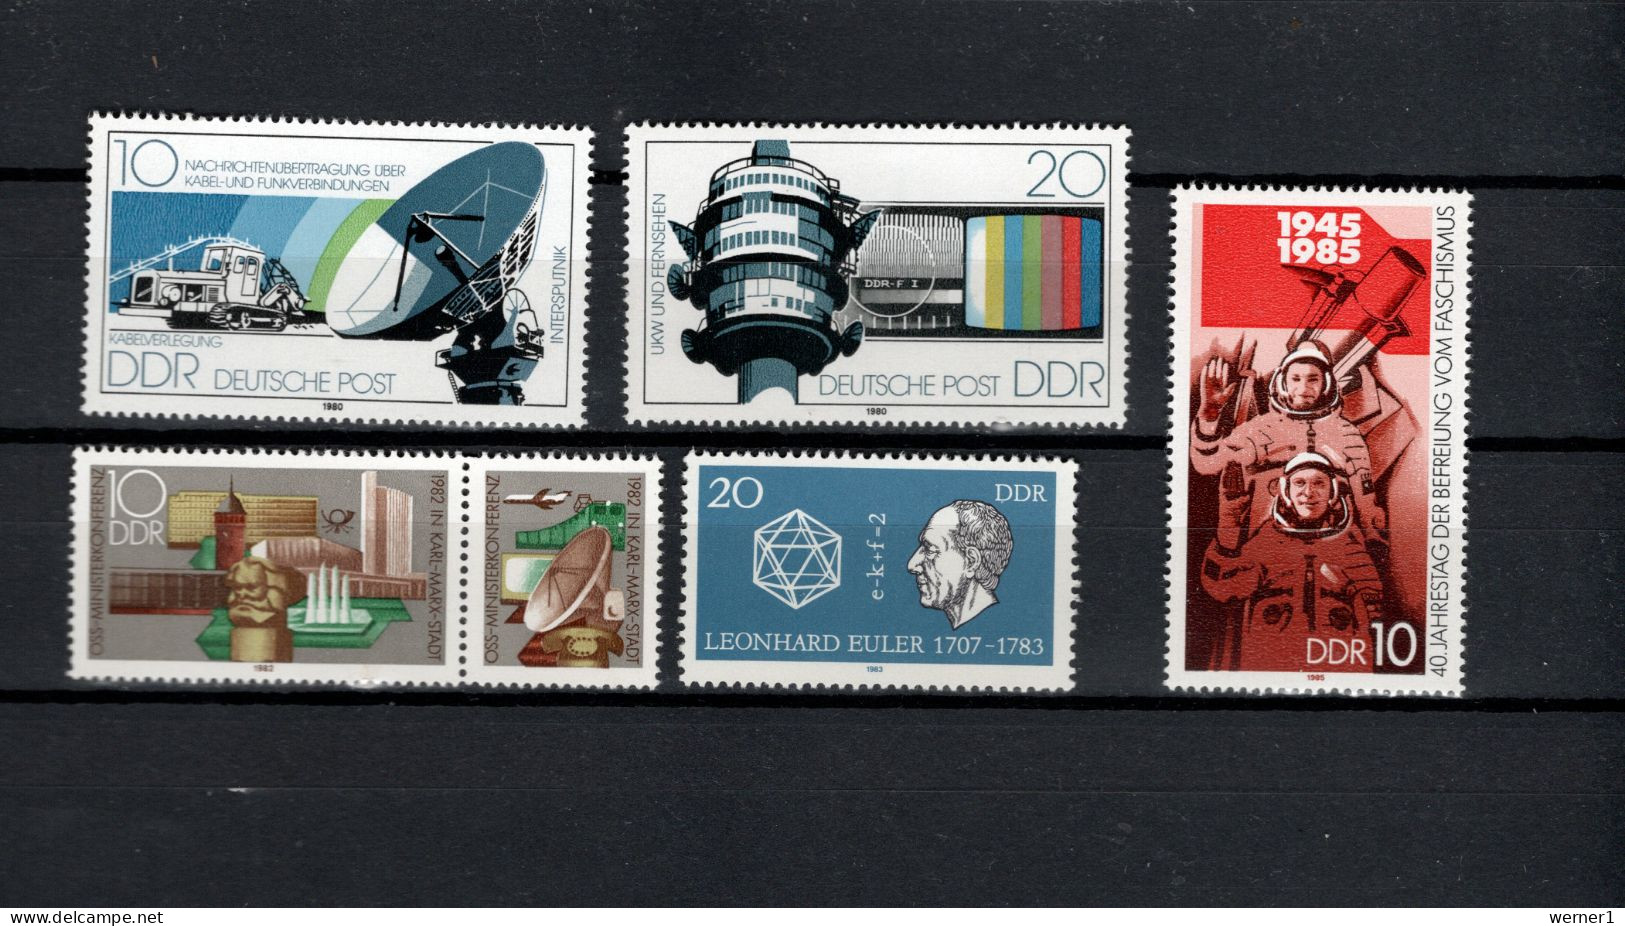 DDR 1980/1985 Space, Telecommunication, Euler, S. Jähn, 5 Stamps MNH - Europa